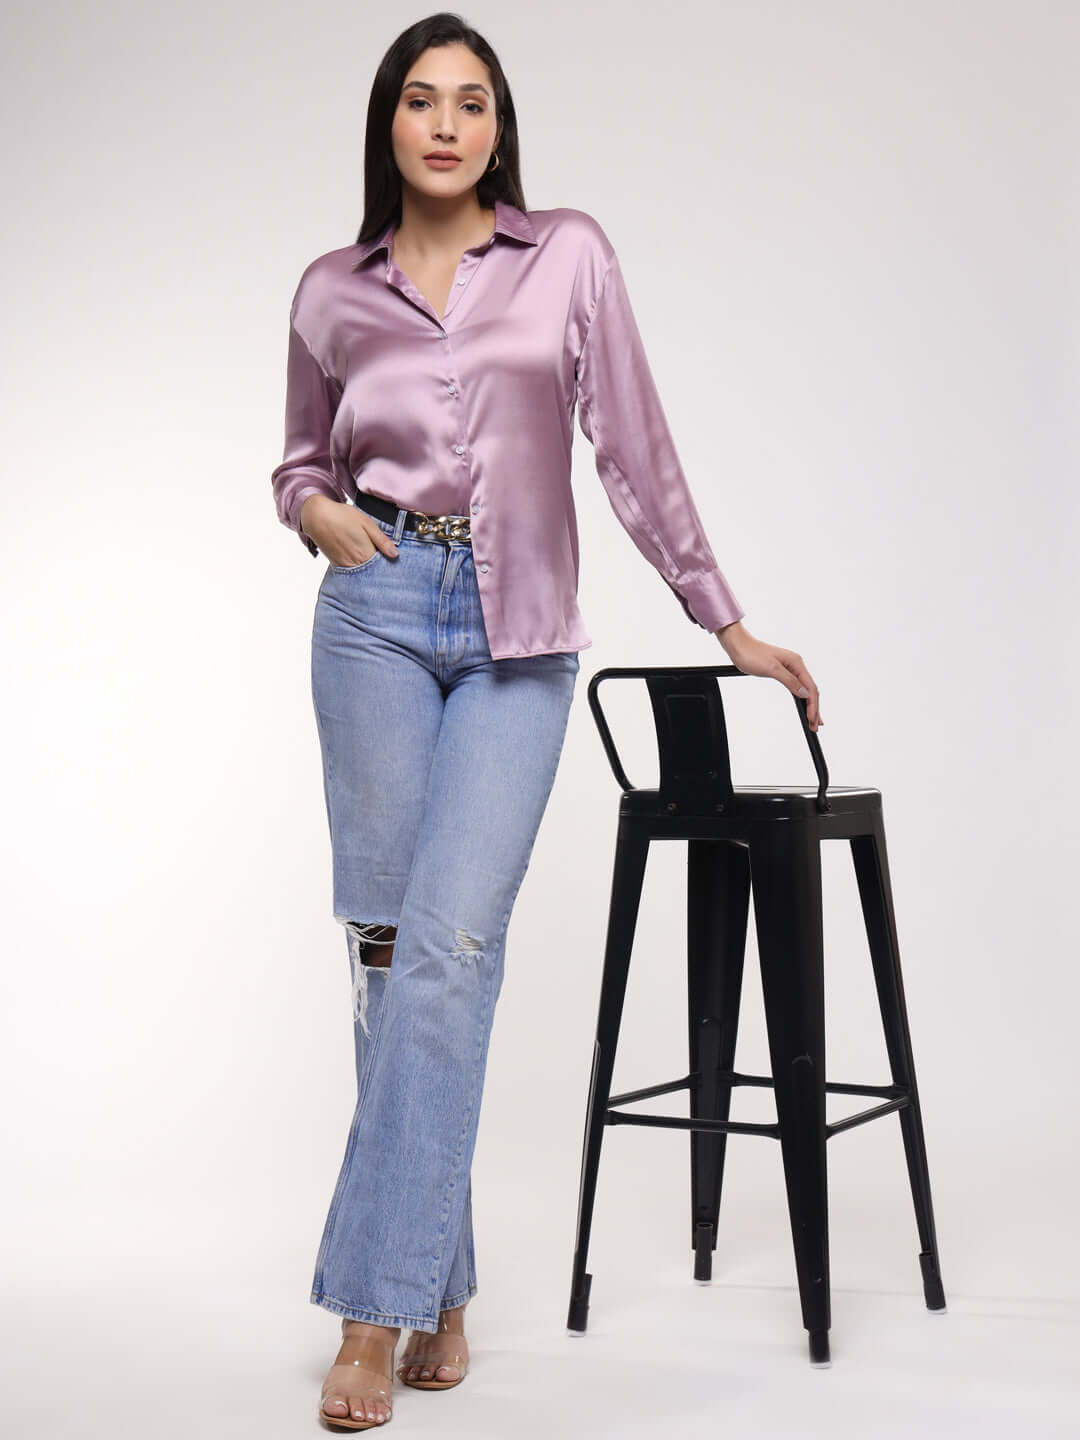 Women's Premium Lilac Satin Shirt